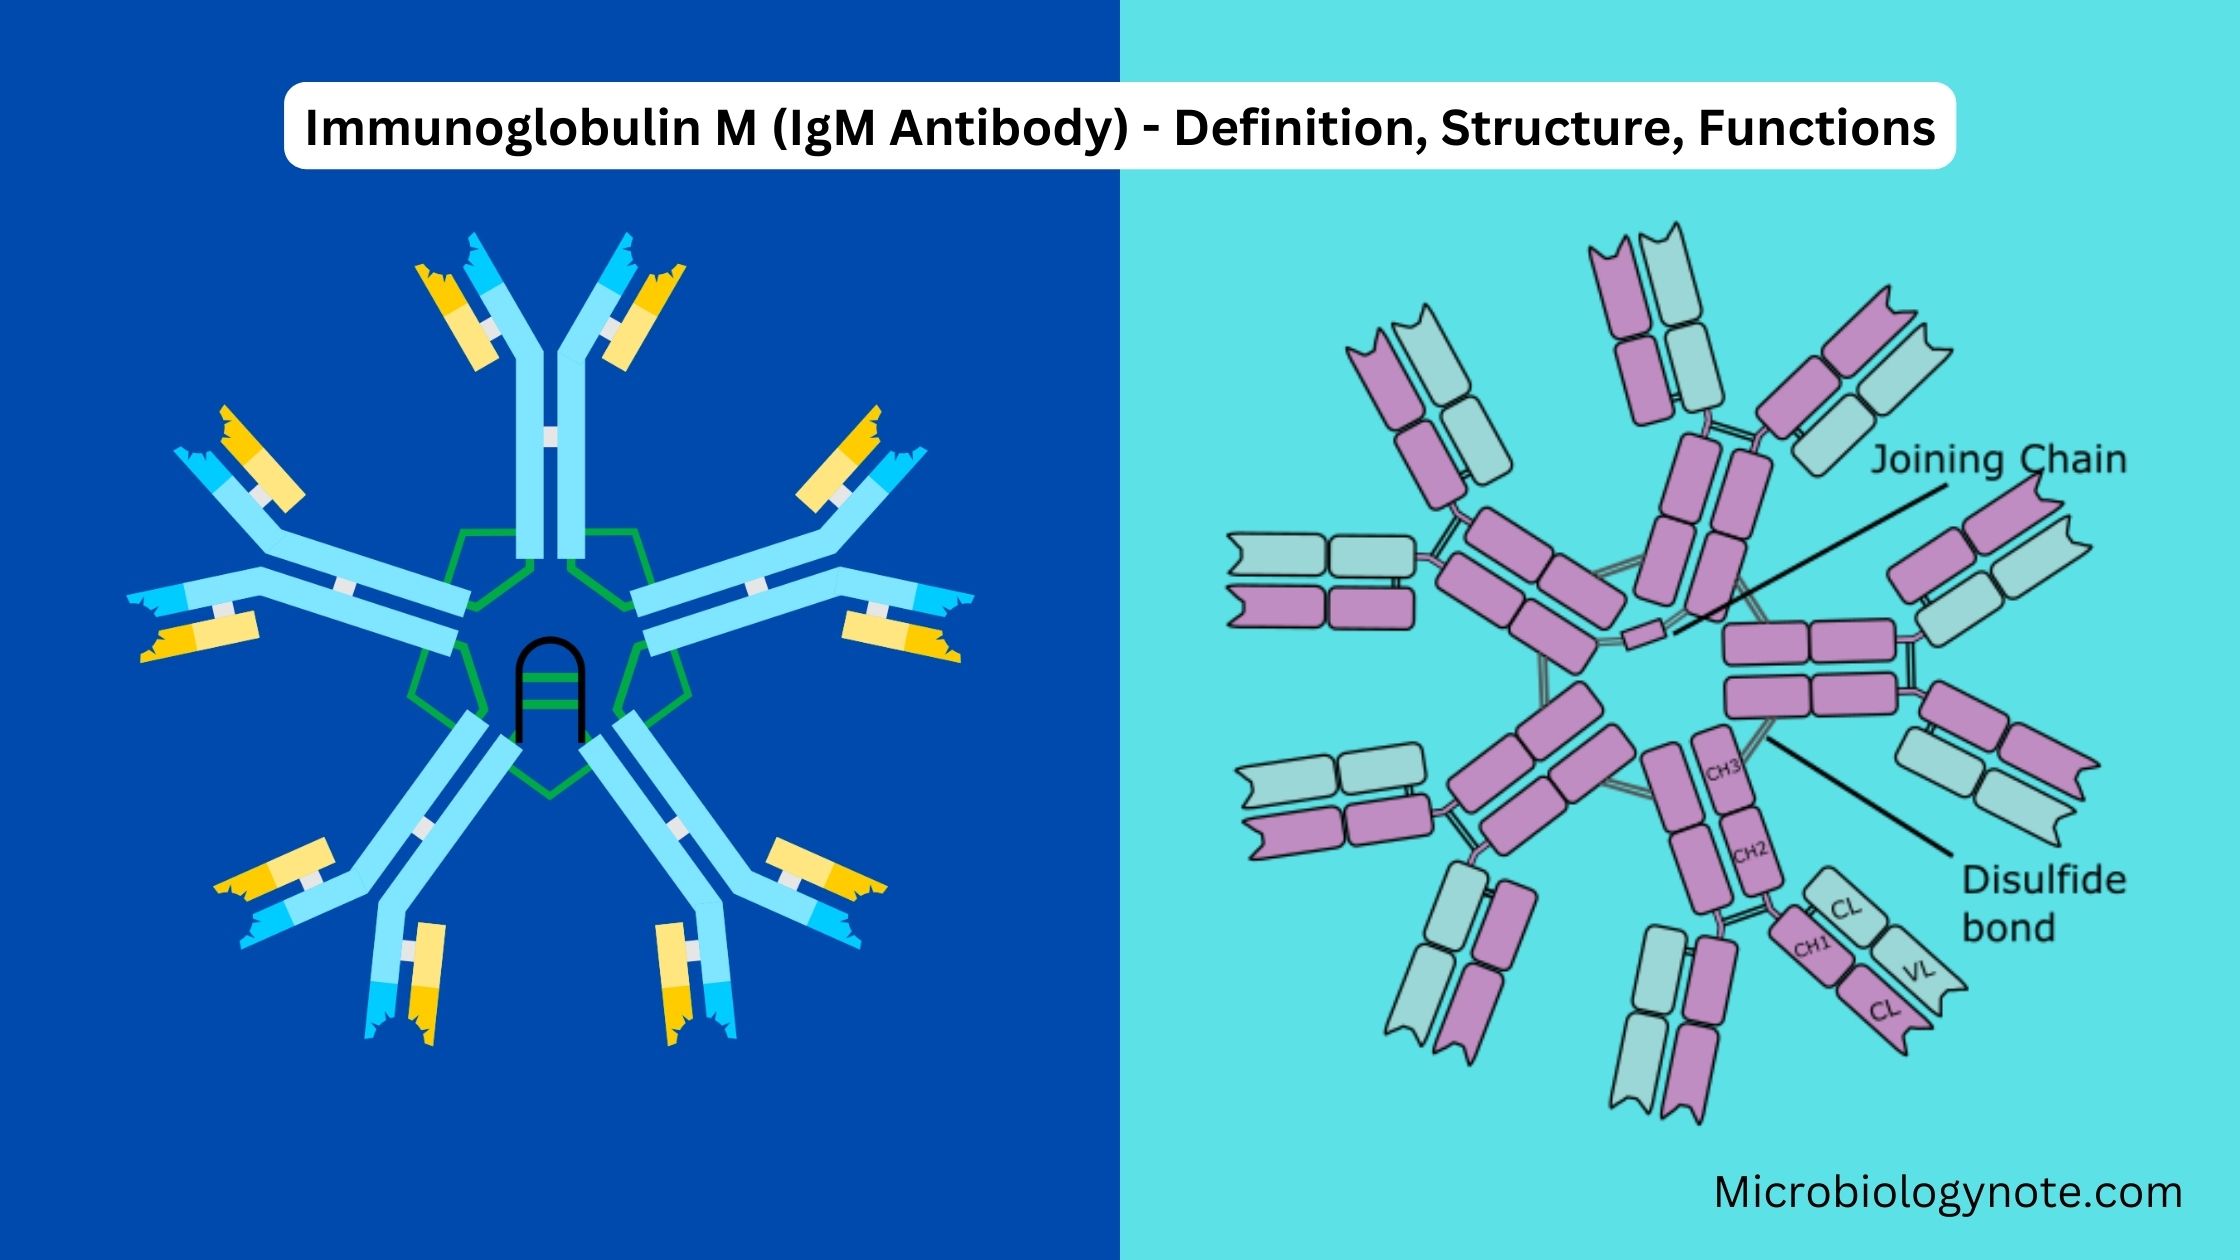 Immunoglobulin M (IgM Antibody) - Definition, Structure, Functions